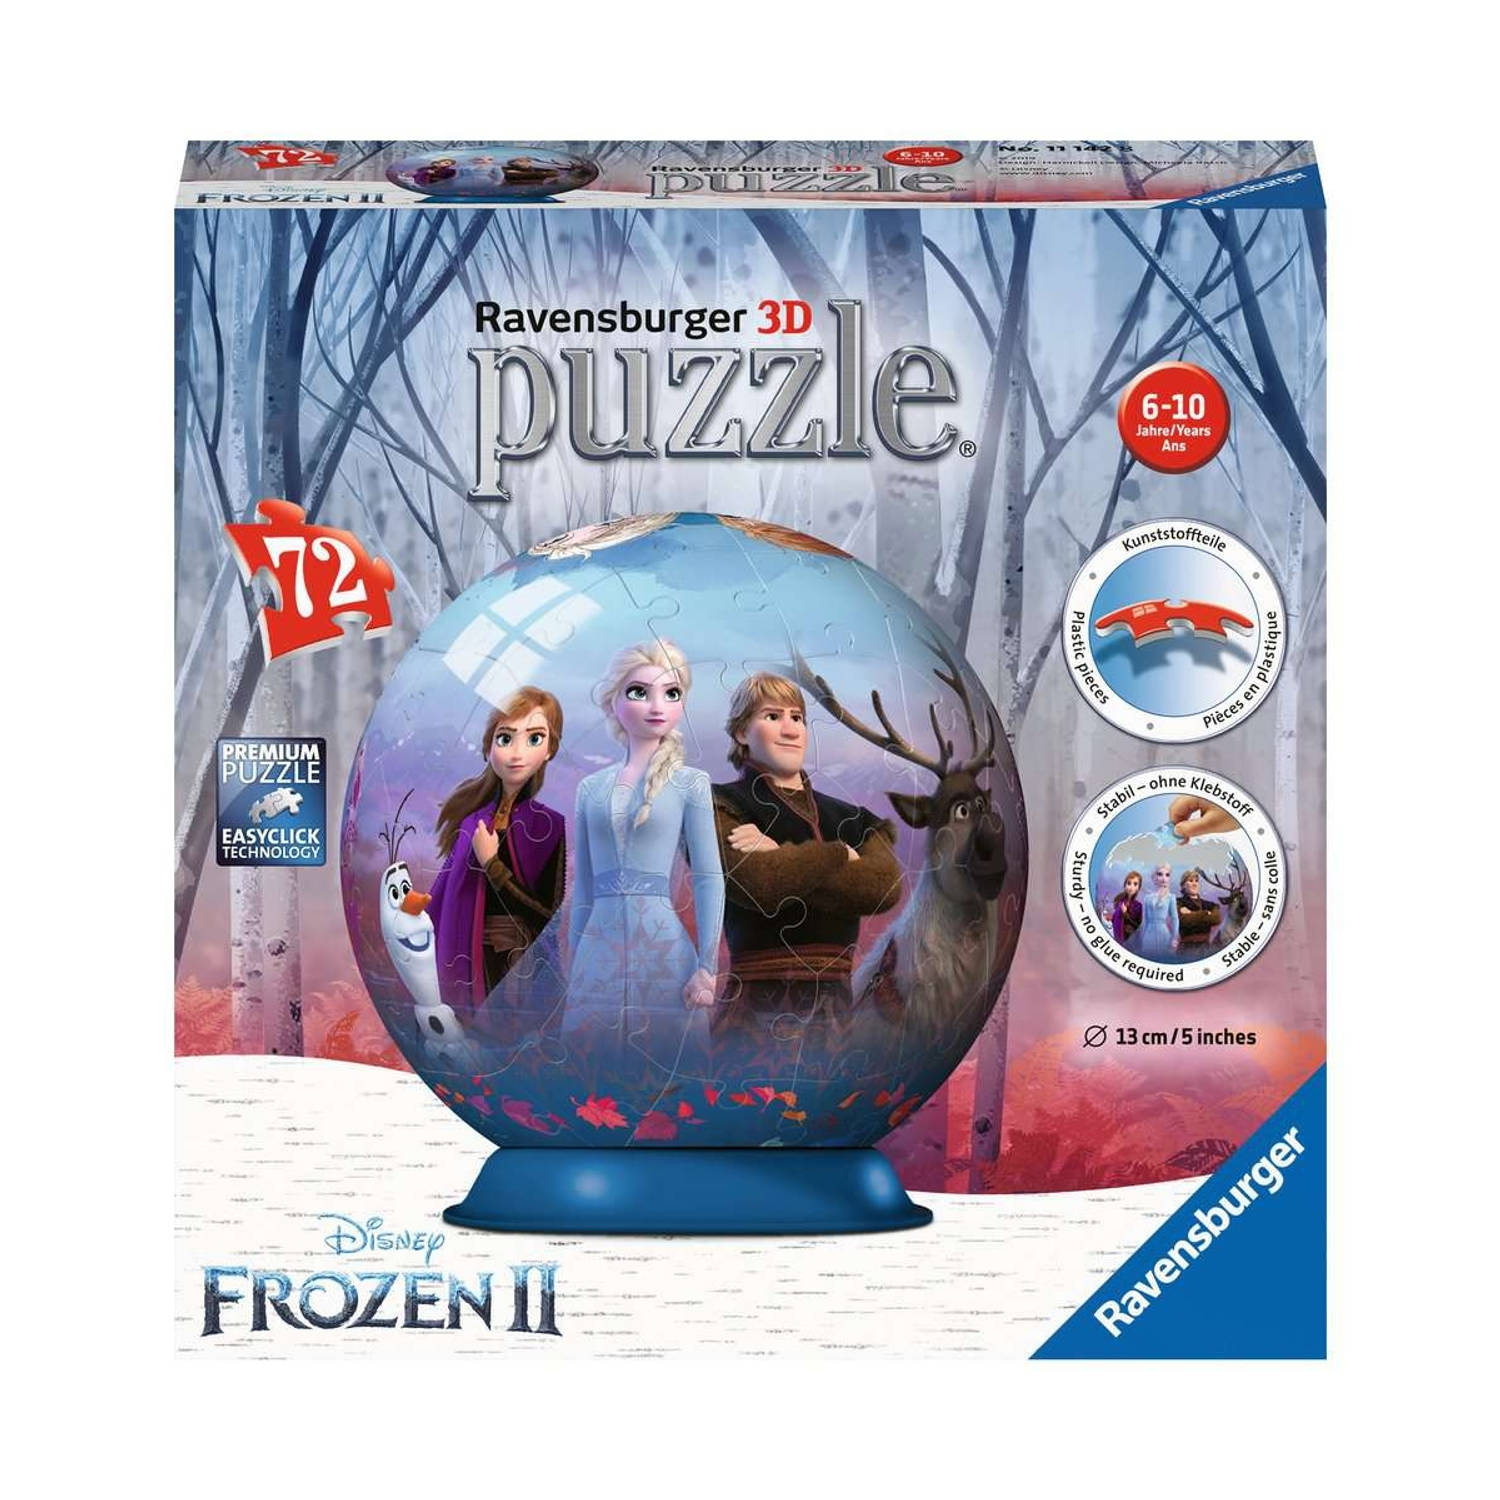 Ravensburger Frozen ll 3D puzzel 72pcs